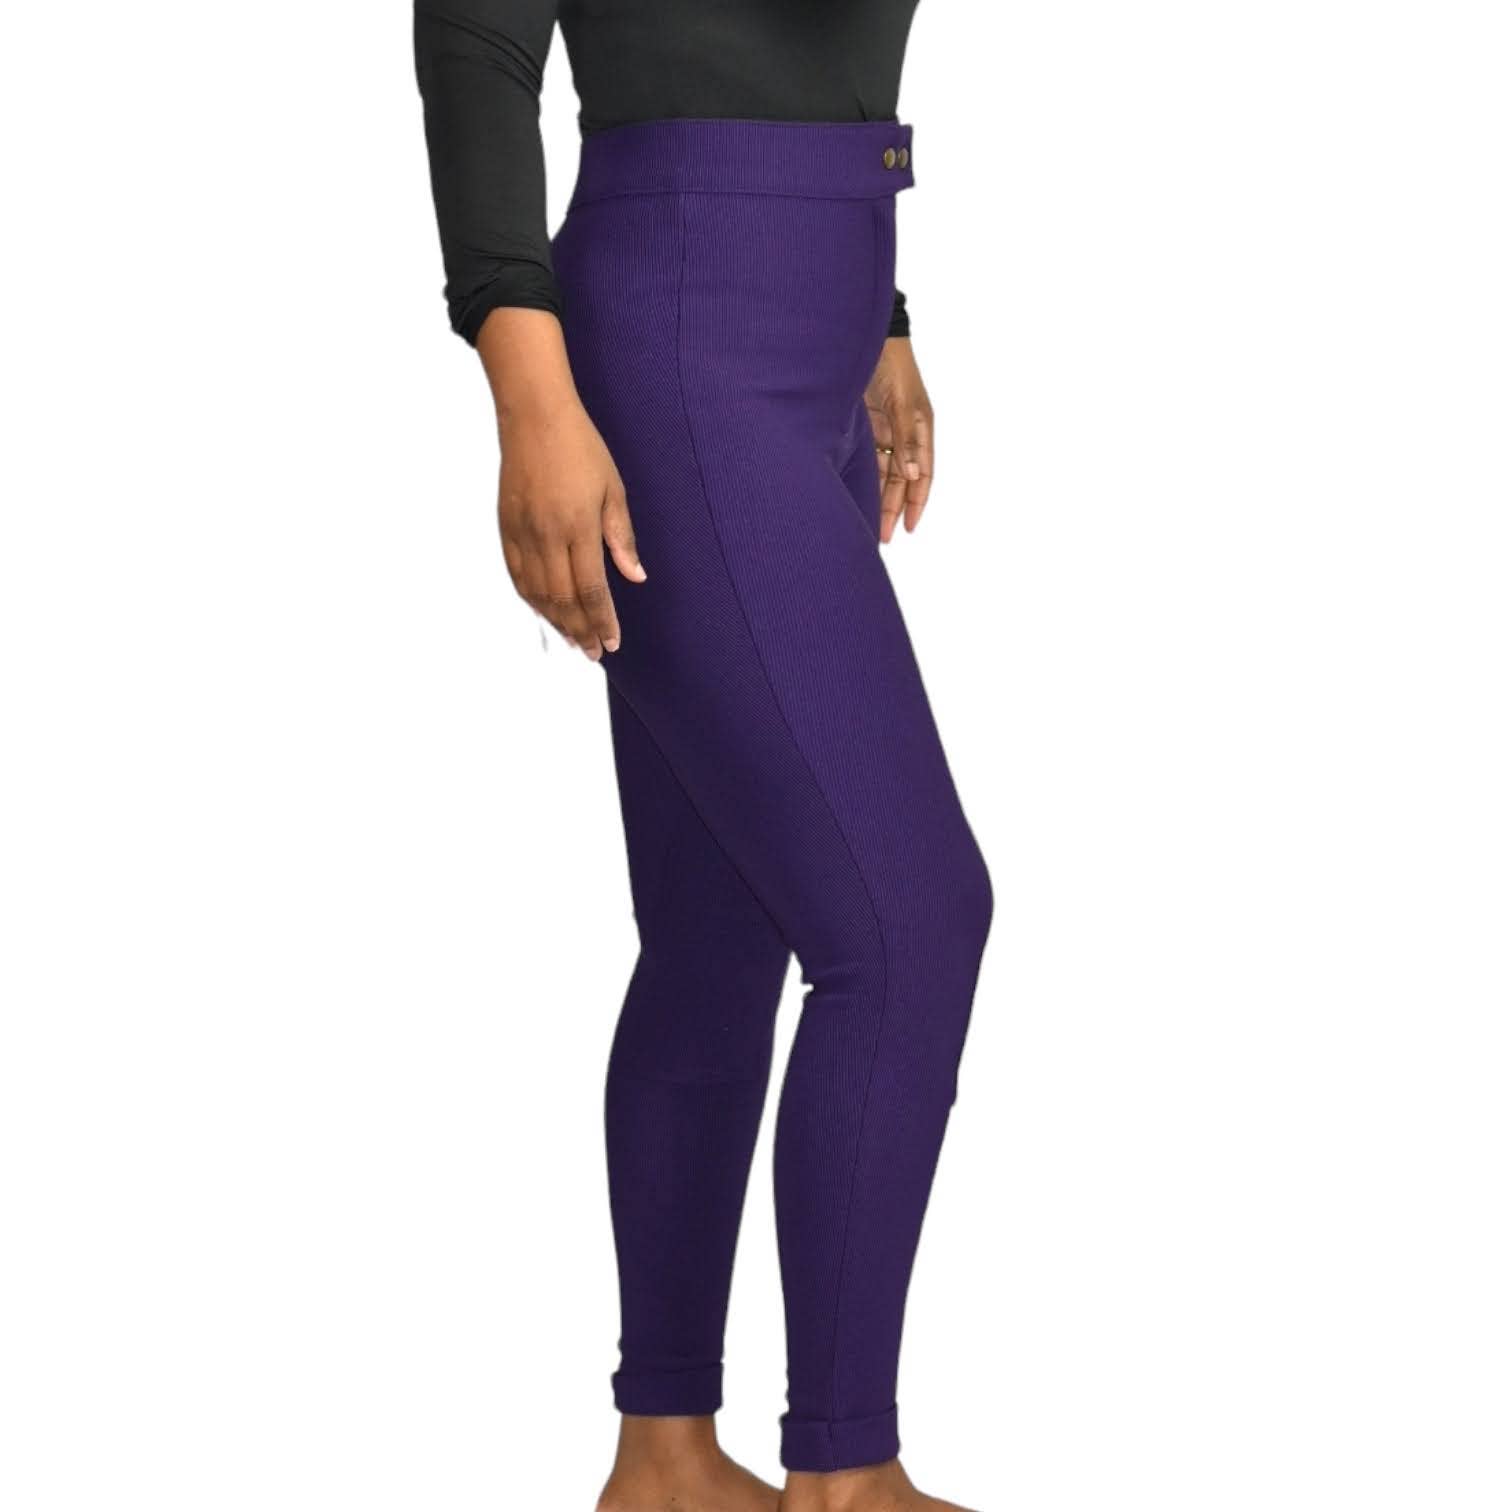 American Apparel Riding Pants Purple Ribbed Nylon High Waisted Slim Size Medium